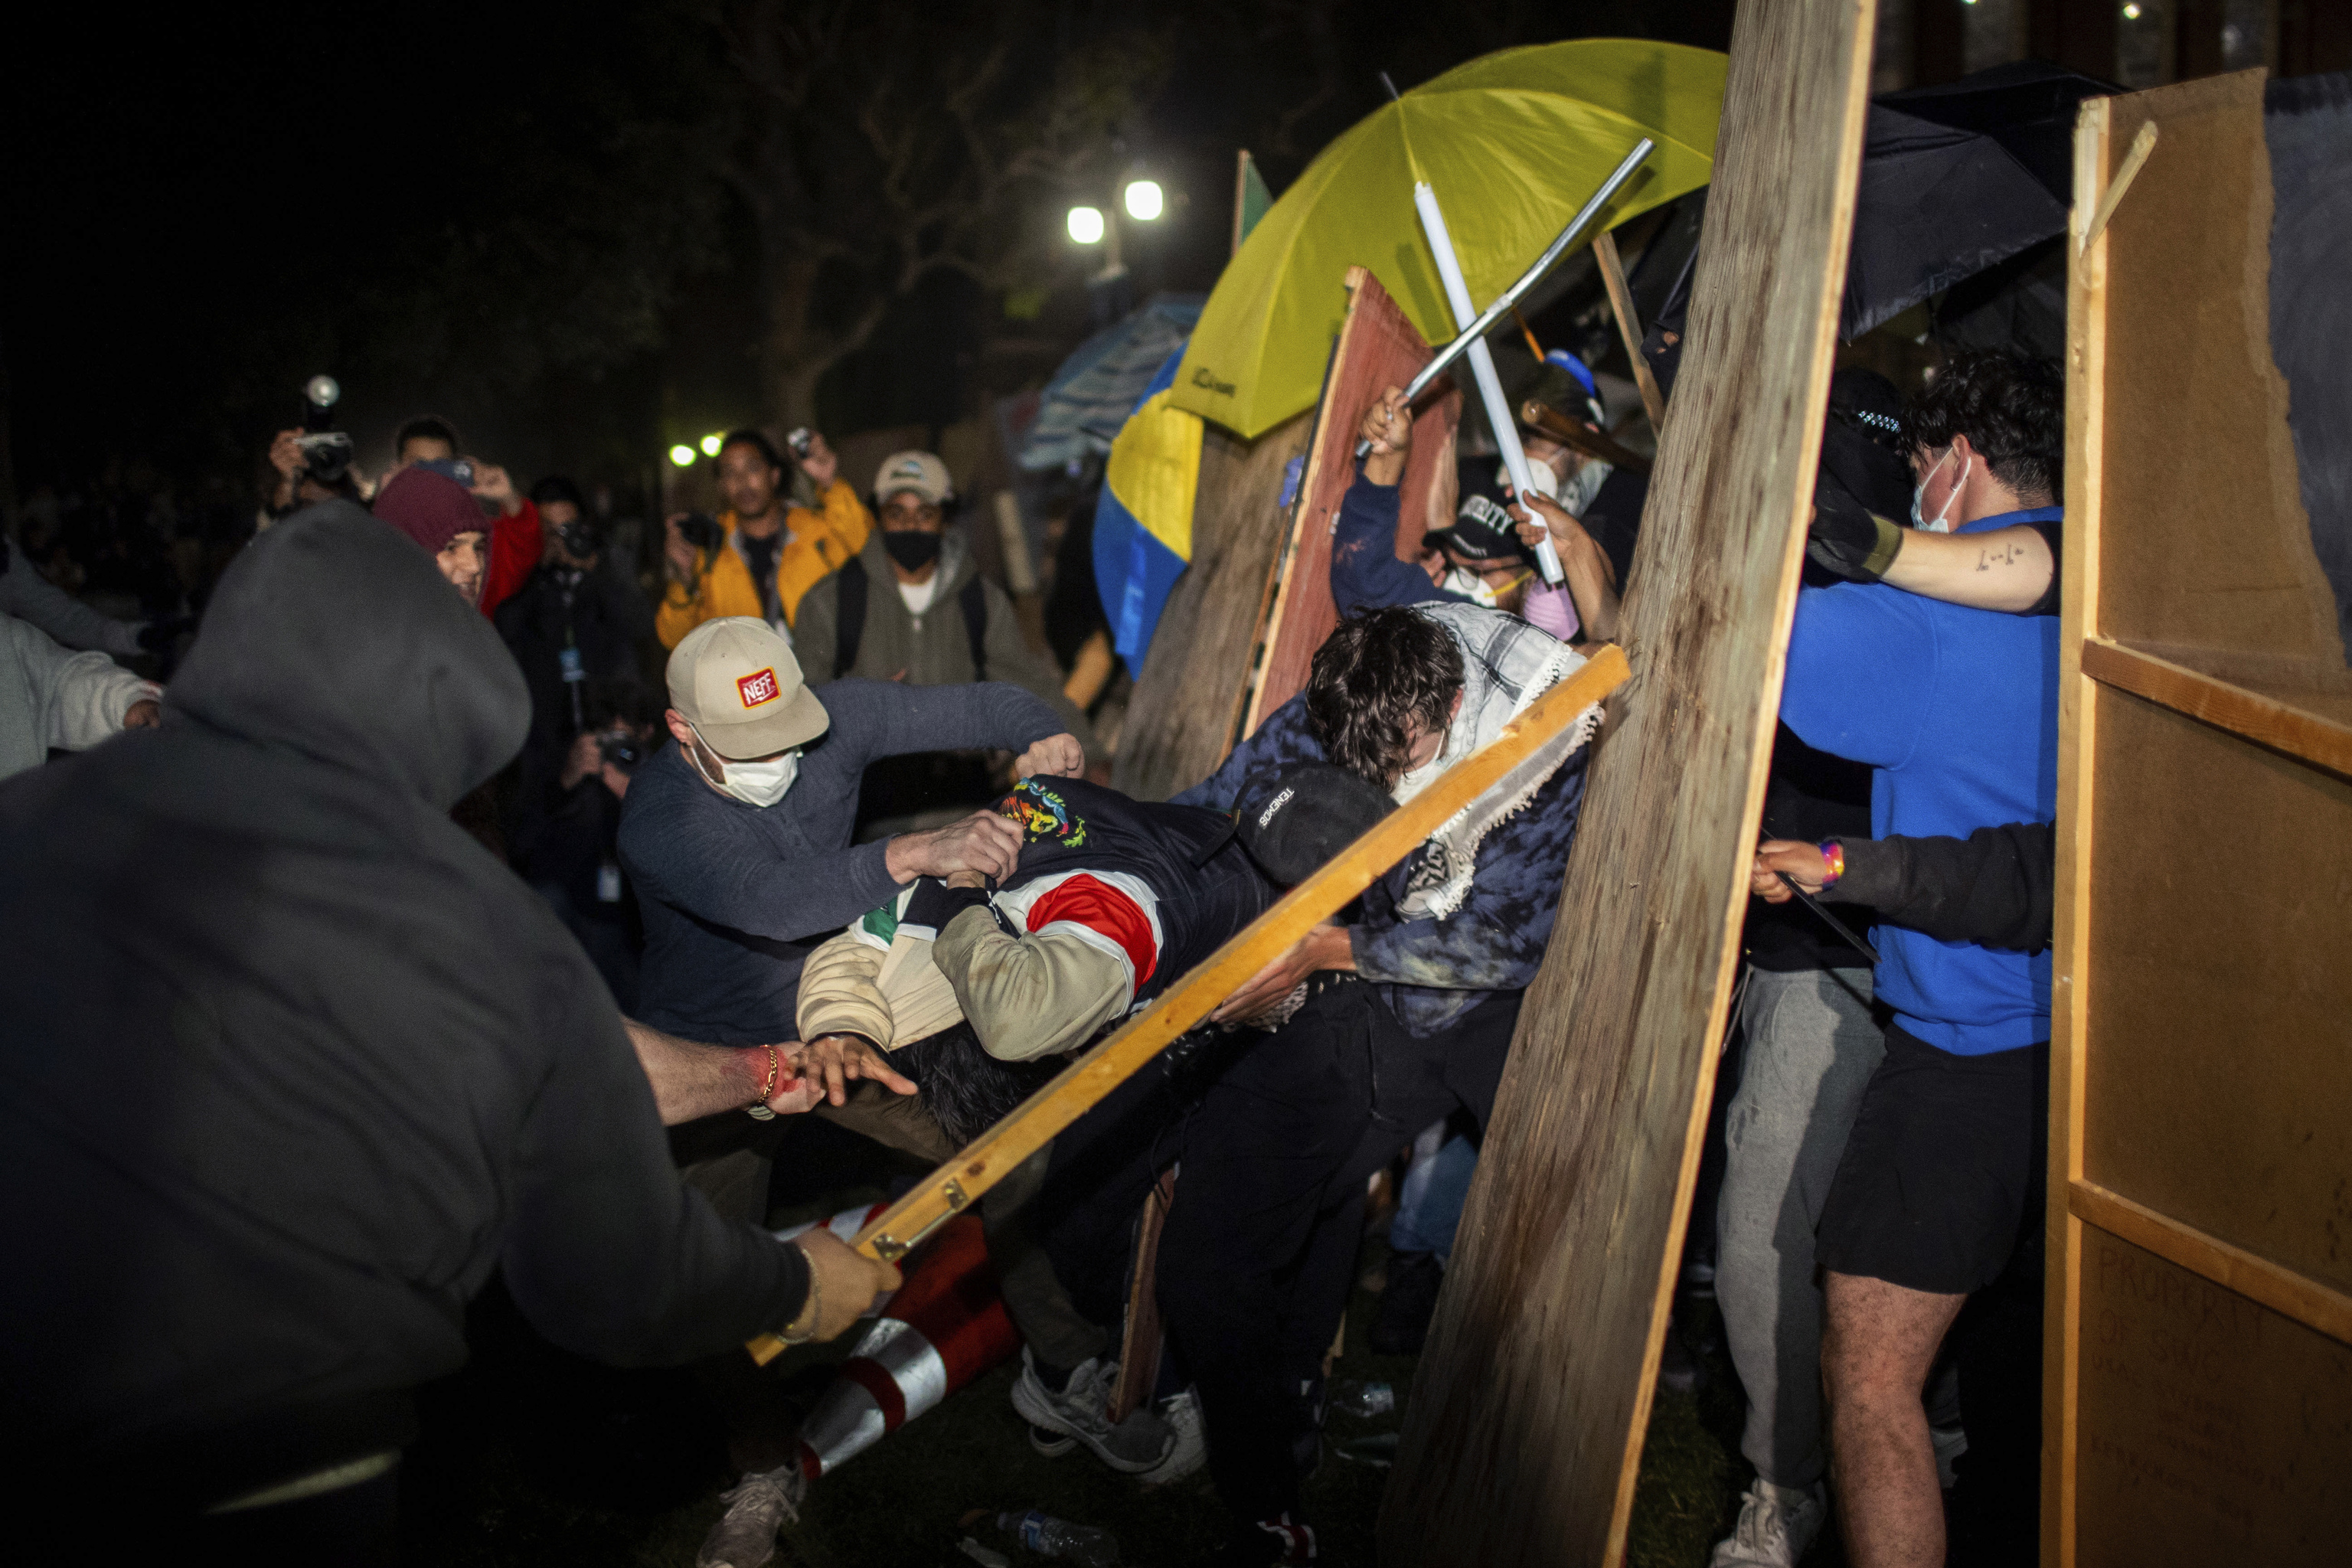 Demonstrators clash at a pro-Palestinian encampment at UCLA.